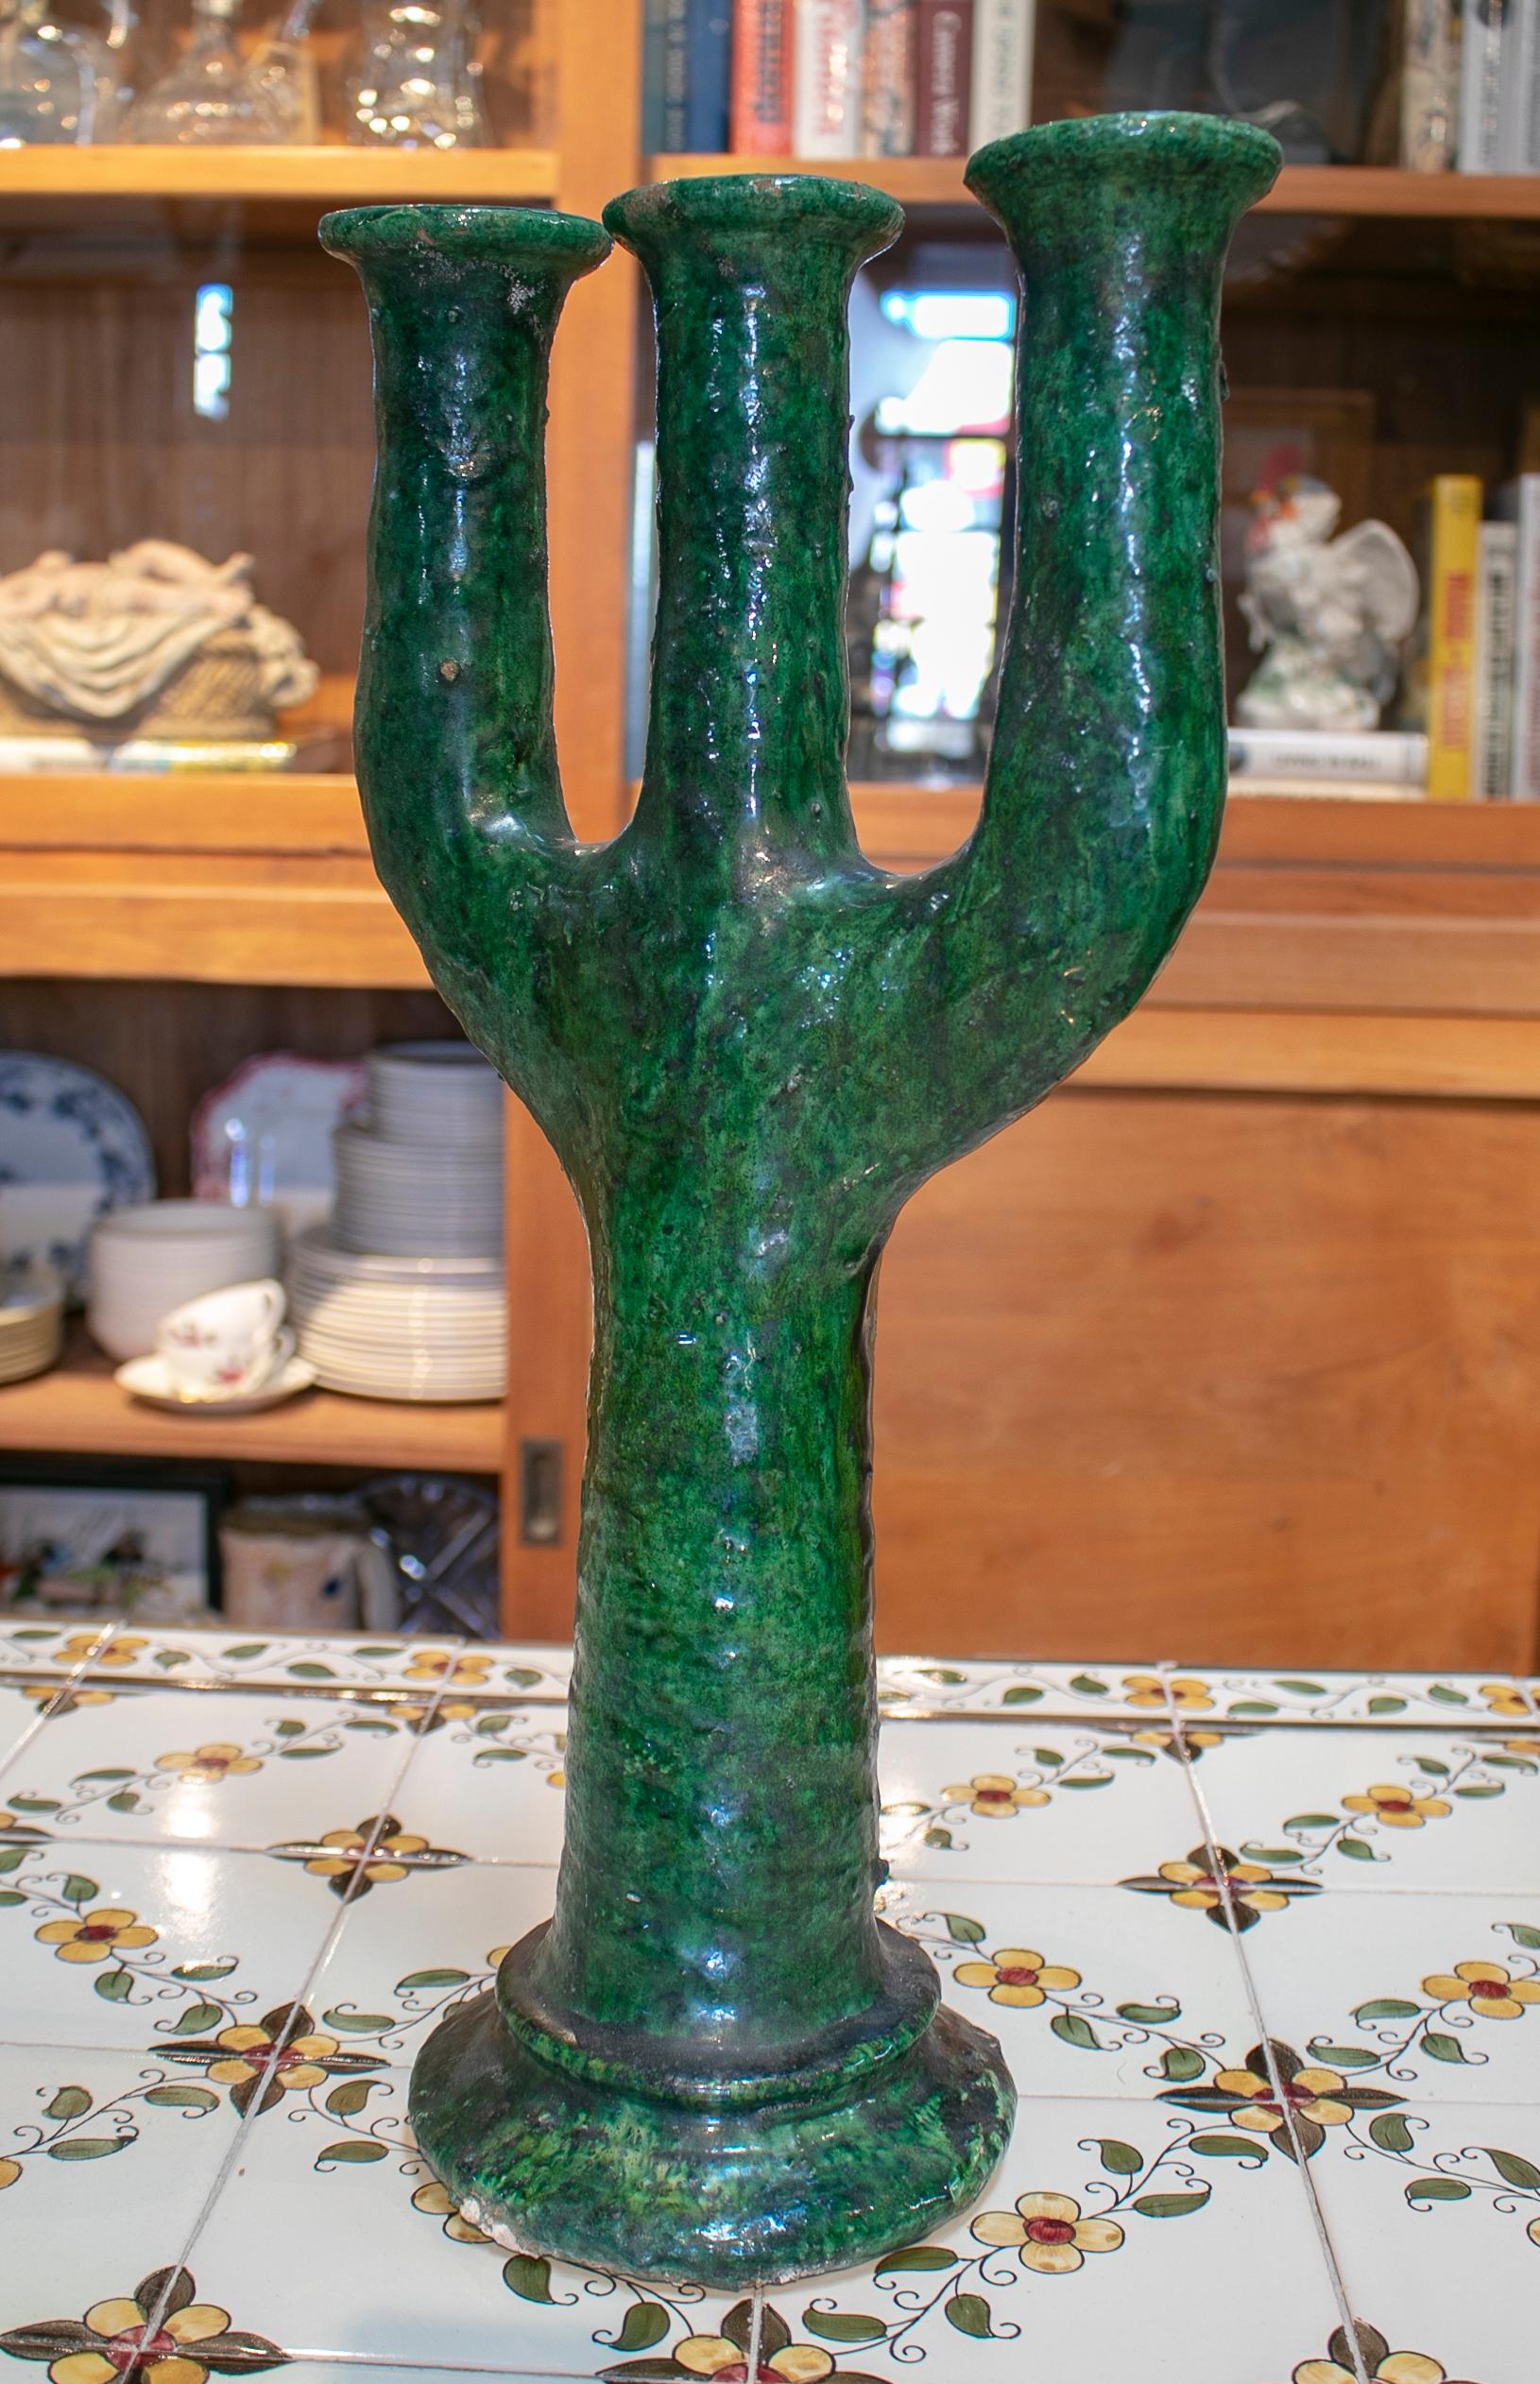 1990s Spanish green glazed ceramic terracotta candlestick.

